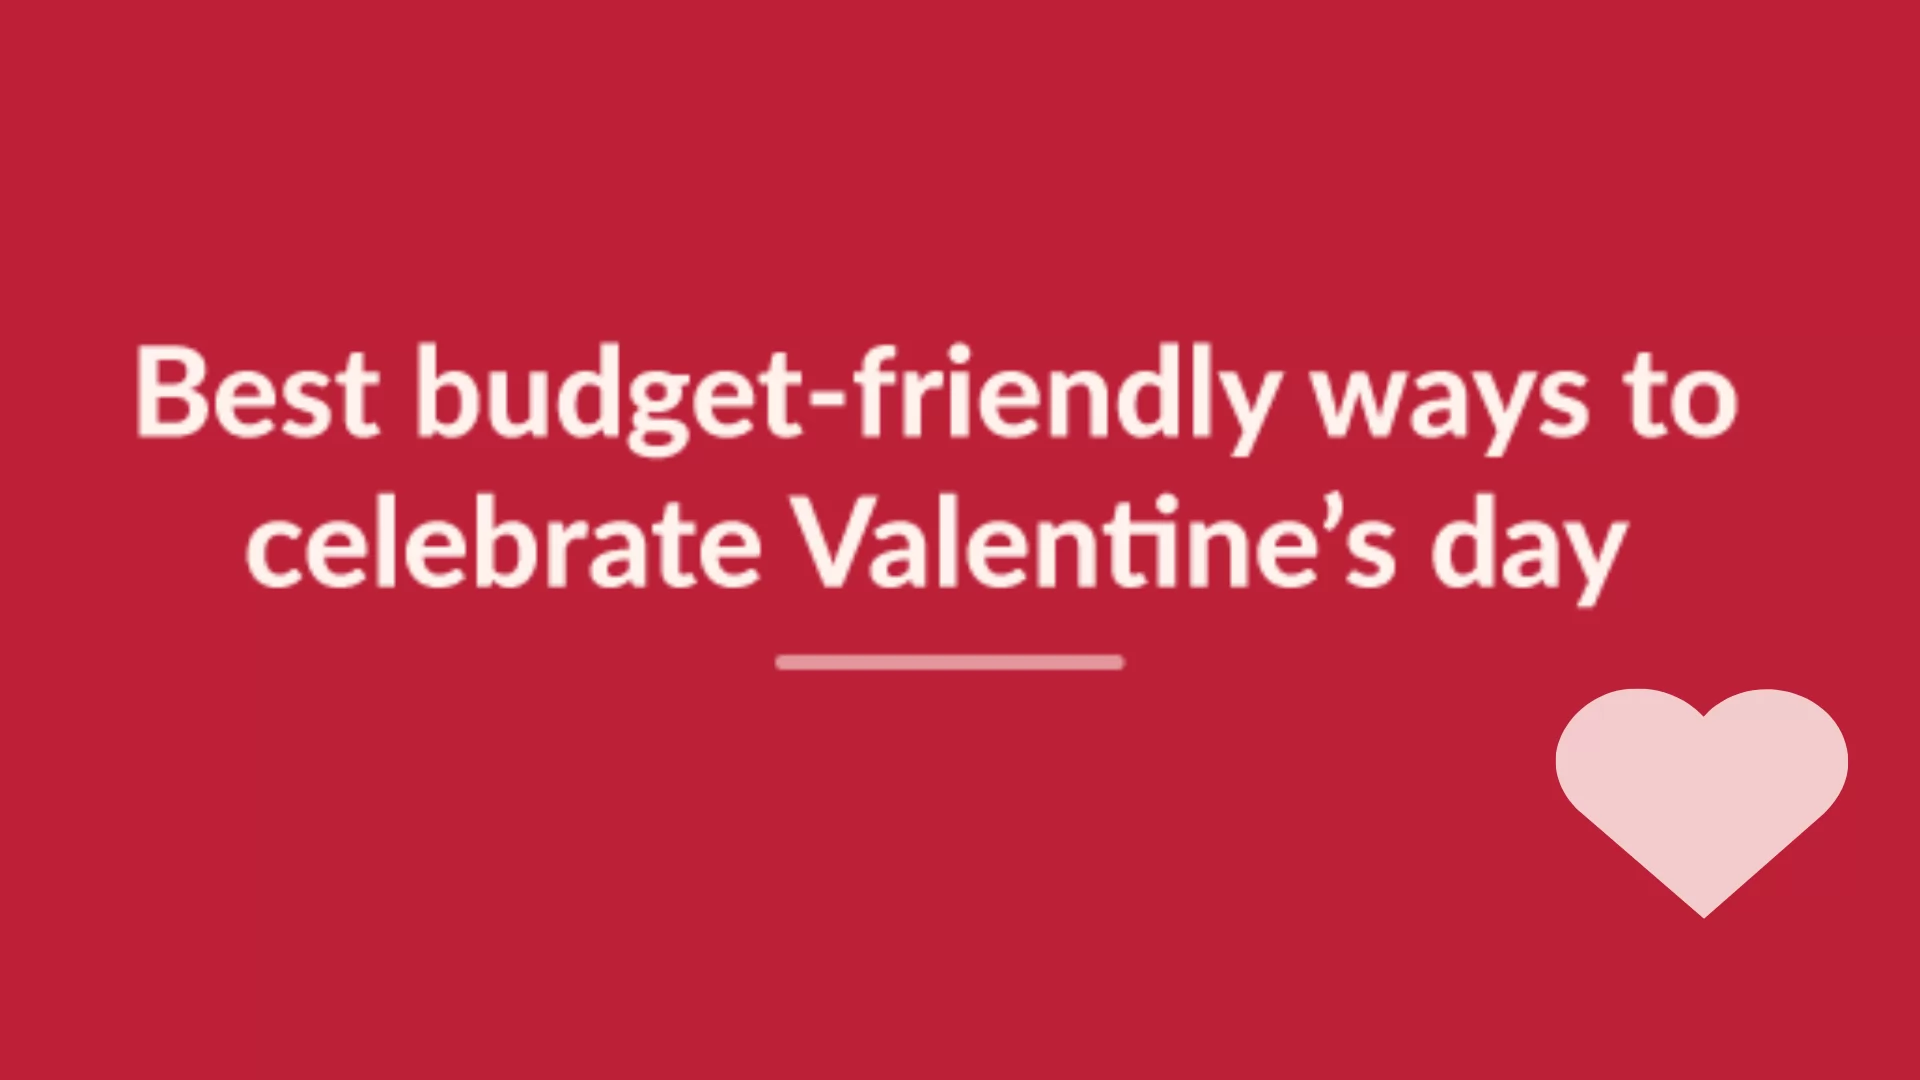 Best Budget friendly ways to celebrate Valentine’s day